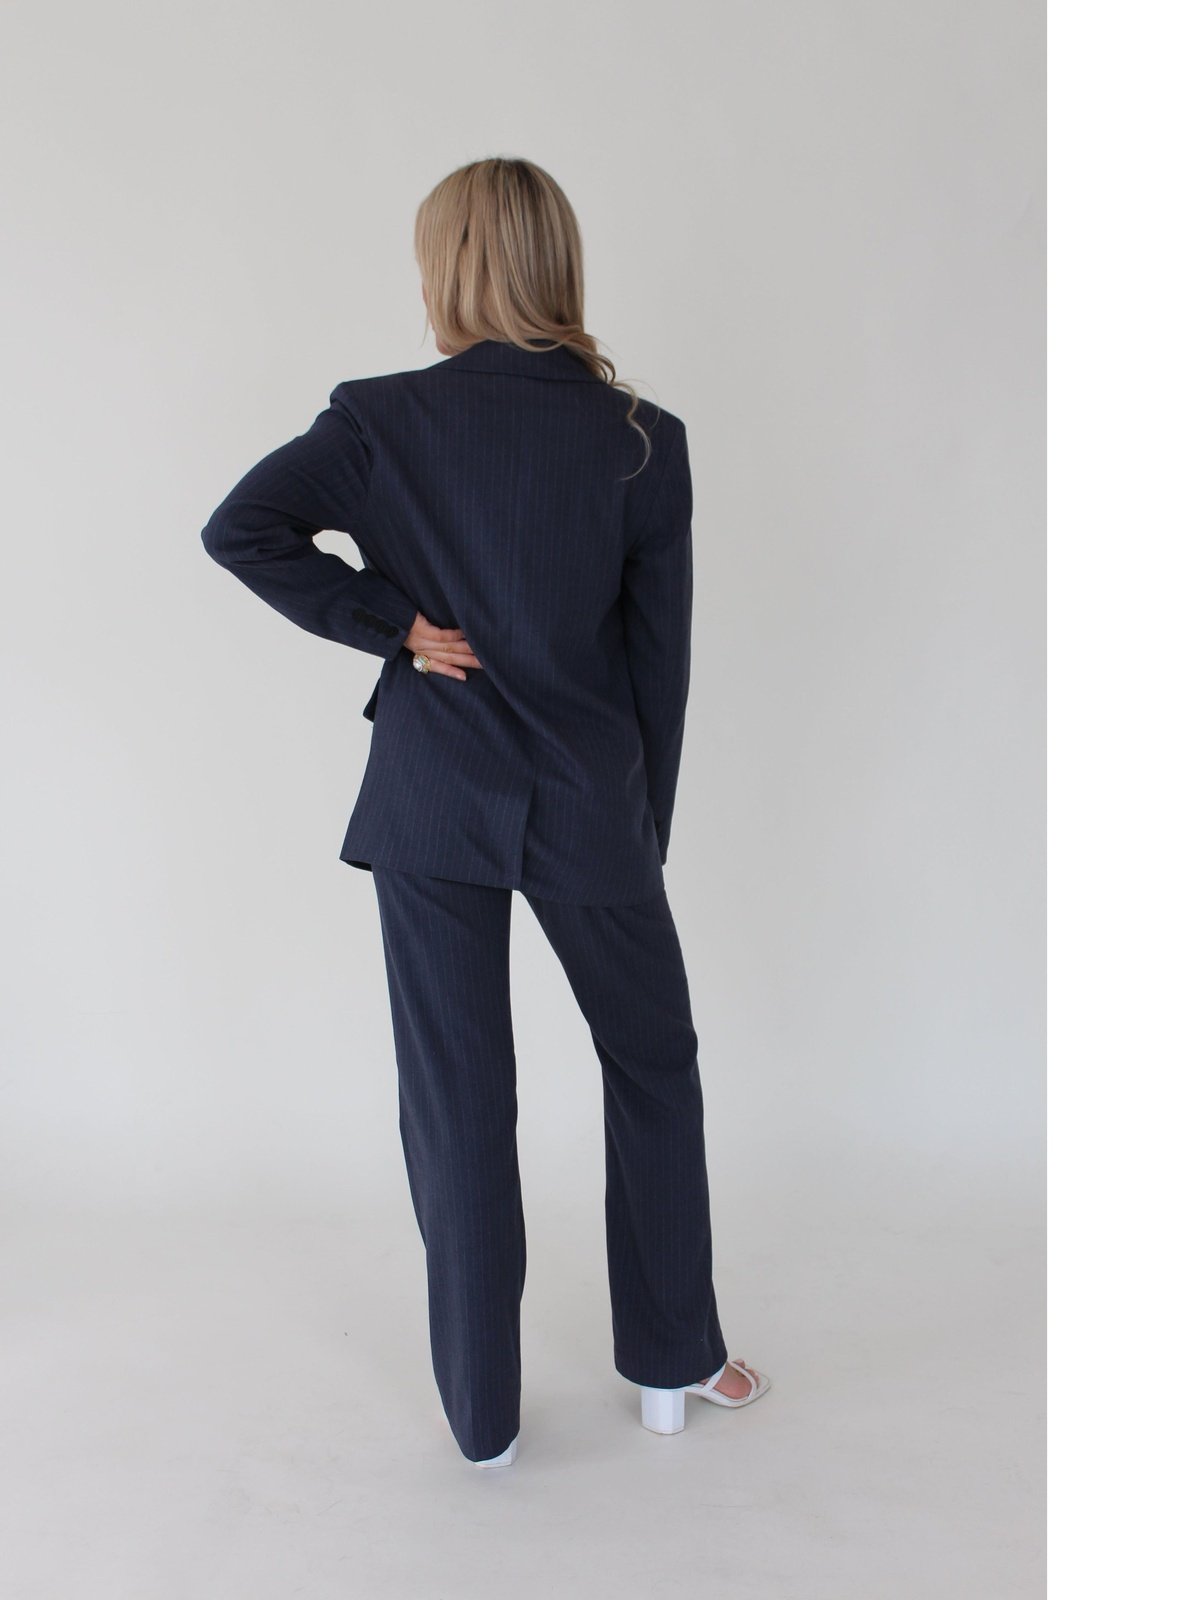 $224 Tiger Mist Women's Black Pinstripe Zip-Front Cropped Skinny Pants Size  S | eBay